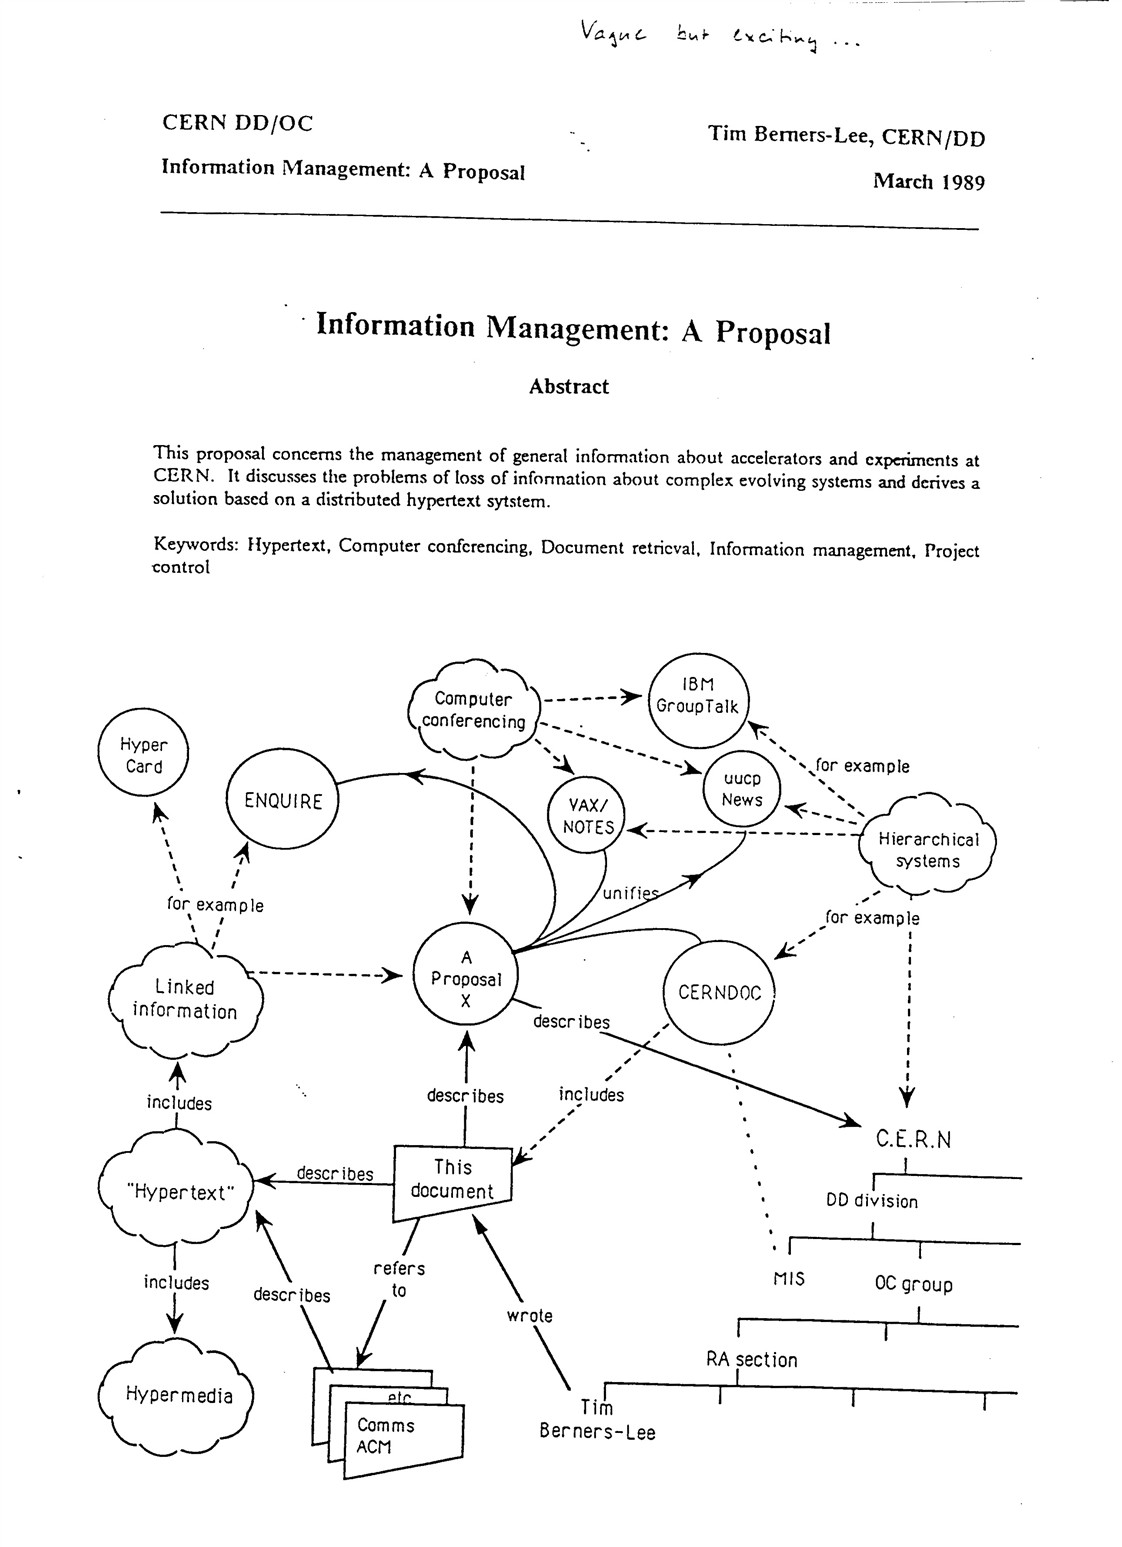 Information Management: A Proposal, 1989.